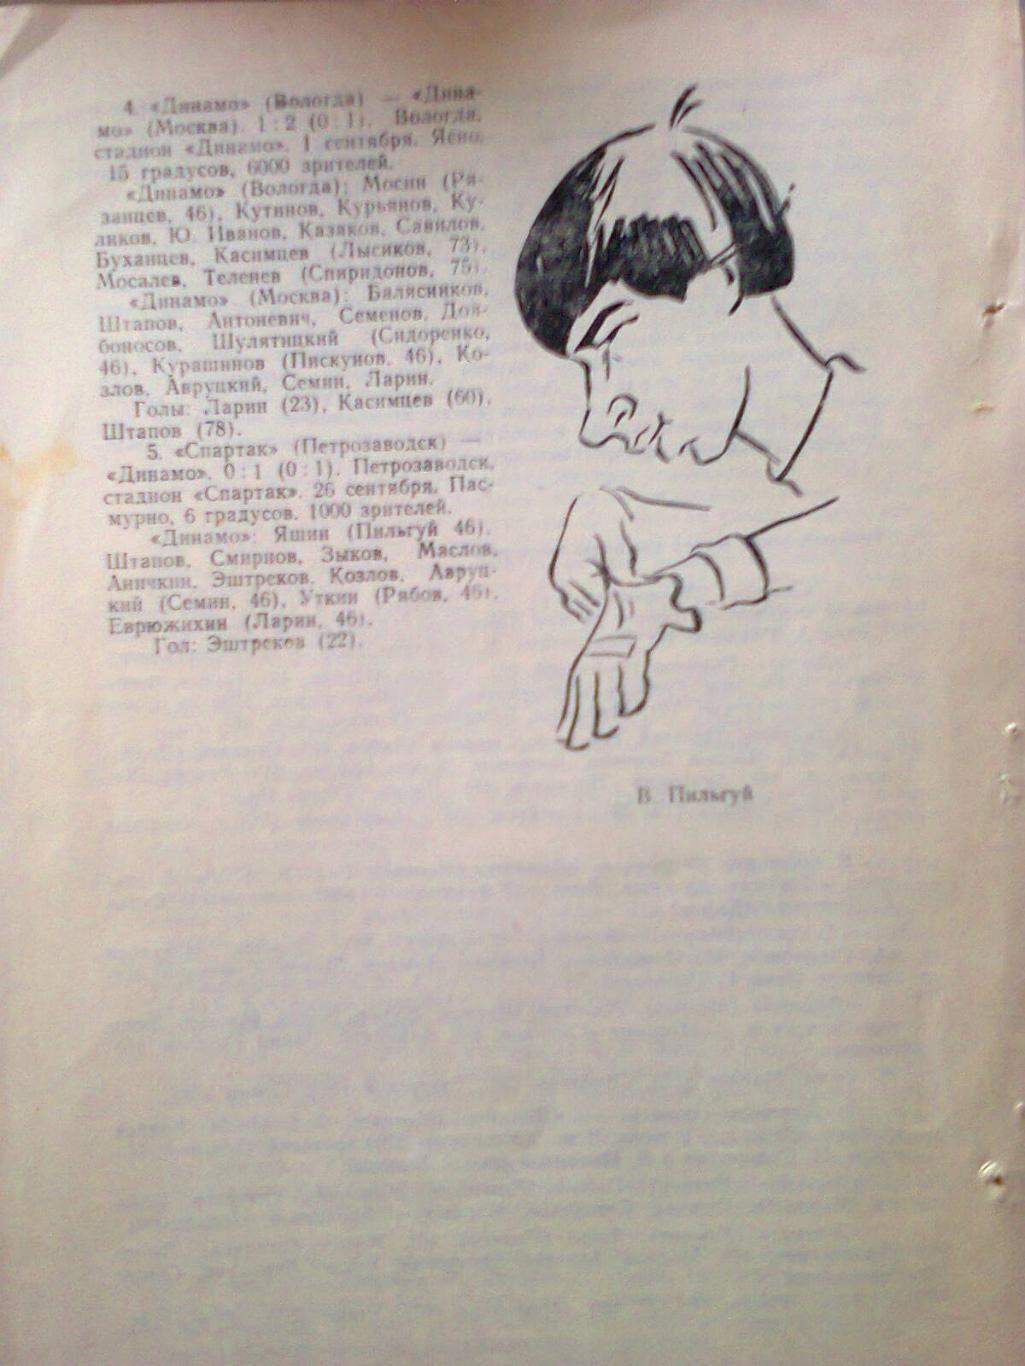 динамо москва календарь справочник 1969-1970 7